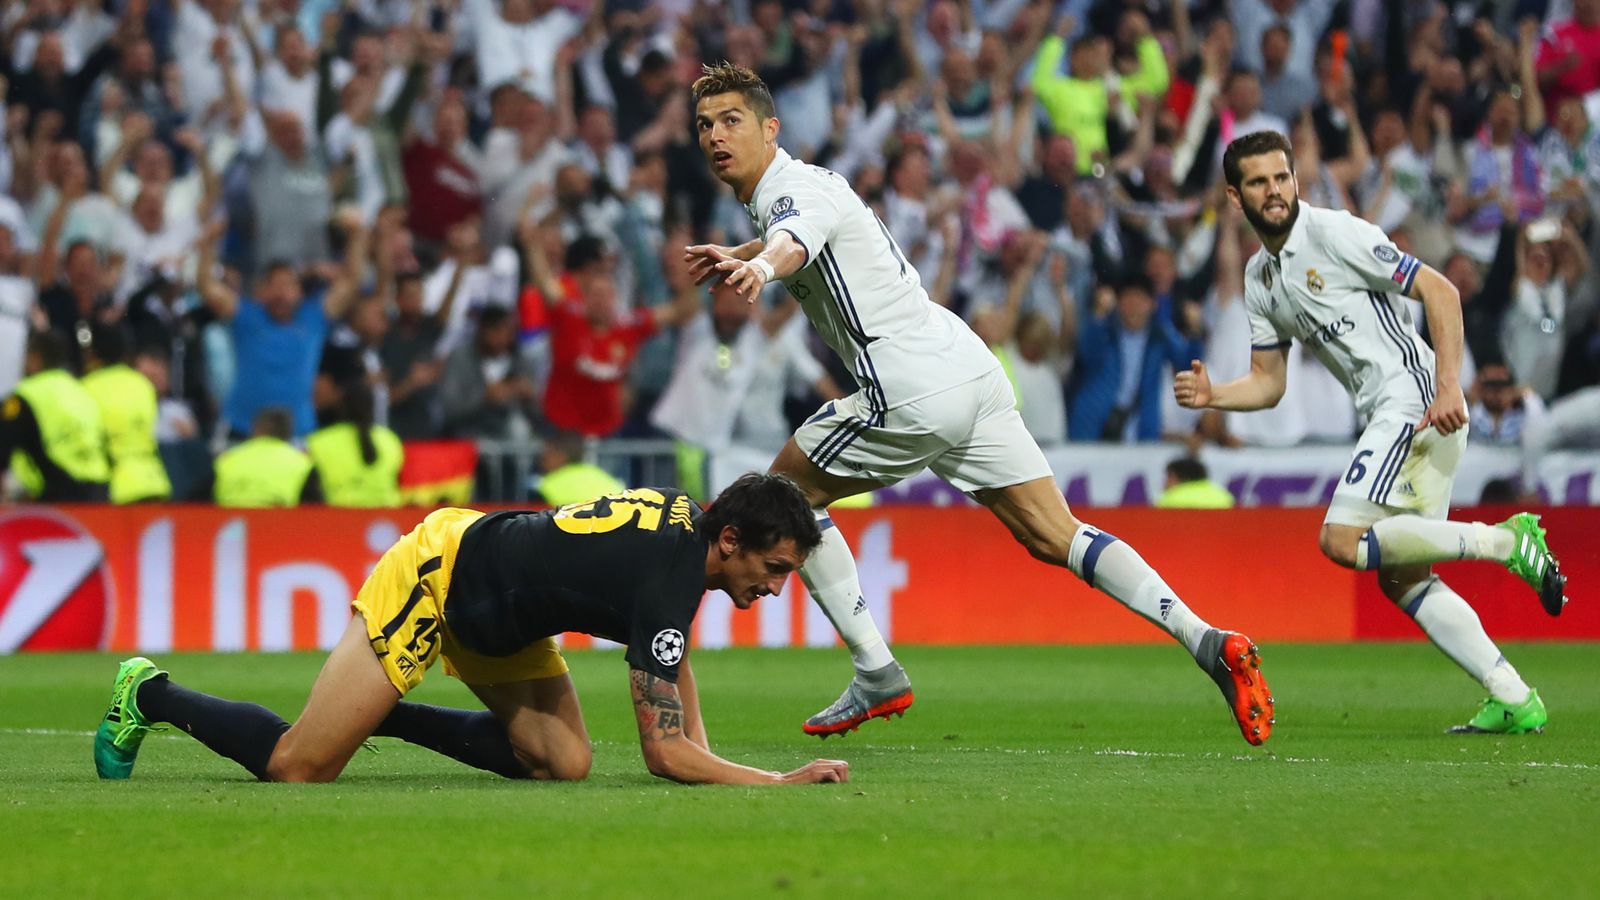 Real Madrid Vs Atl Ti Final Score 3 0 Cristiano Ronaldo